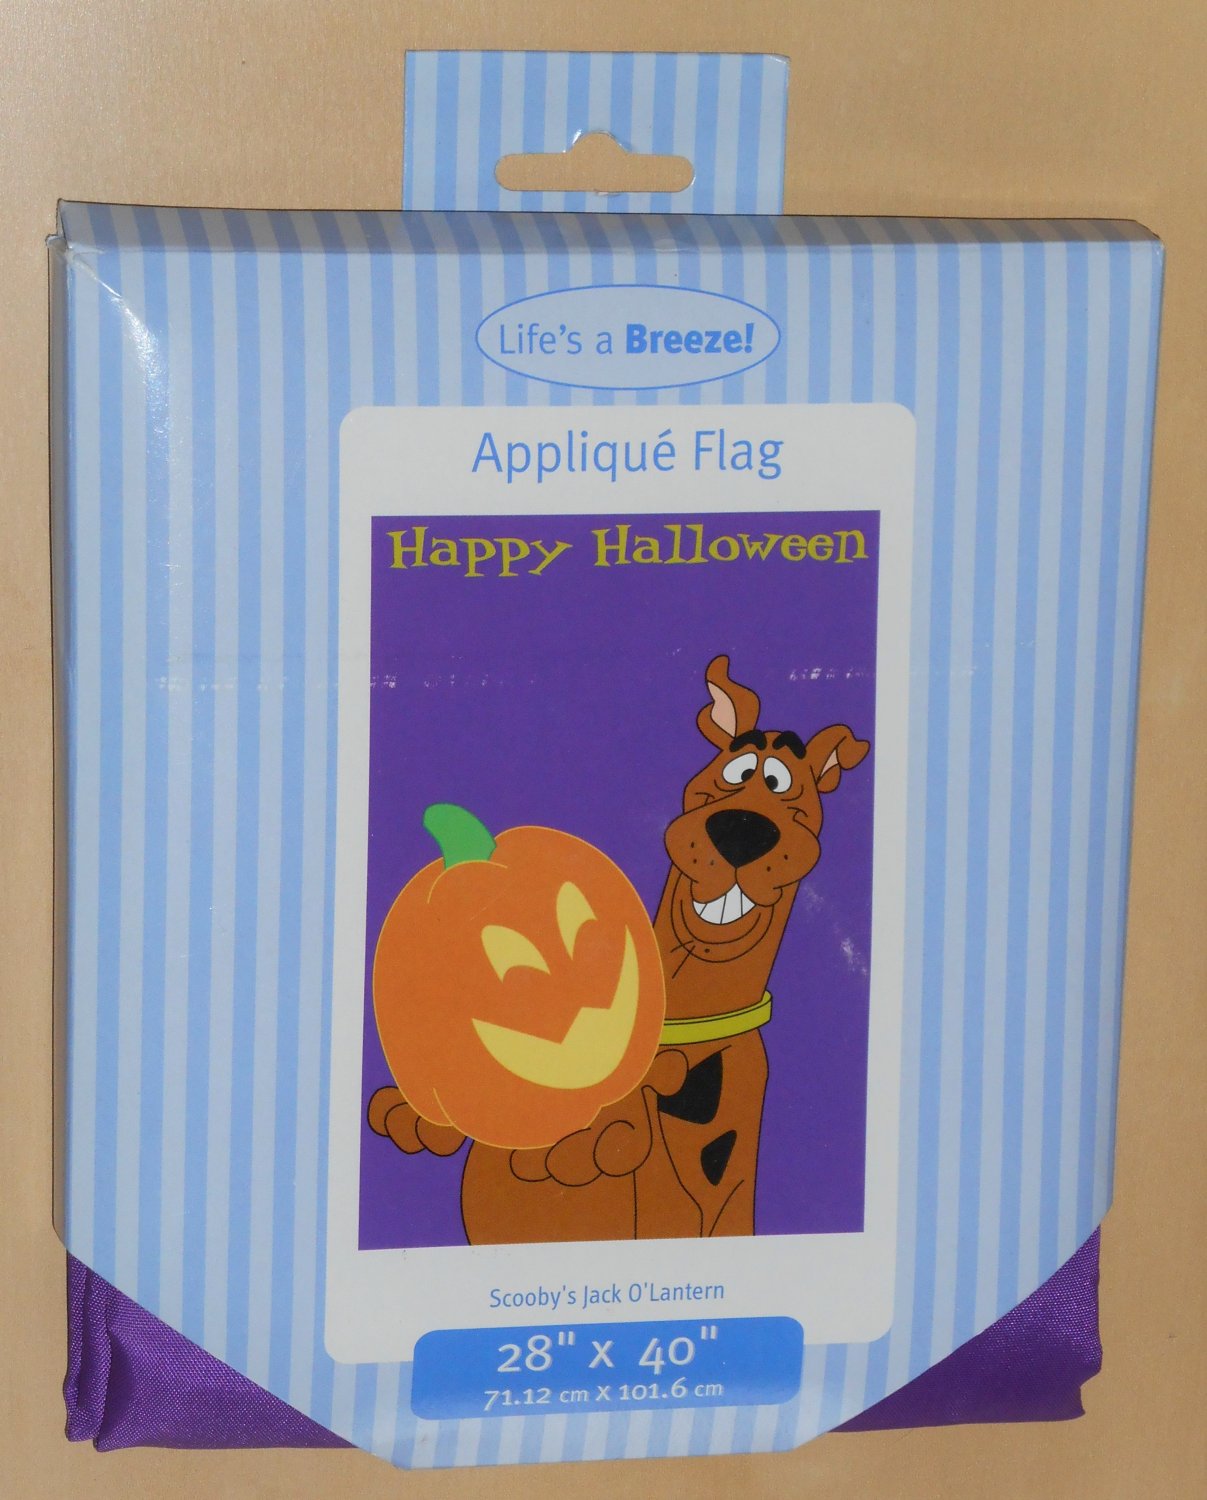 Scooby Doo Scooby's Jack O'Lantern Happy Halloween Garden Flag 28 x 40 Applique Hanna Barbera NEW